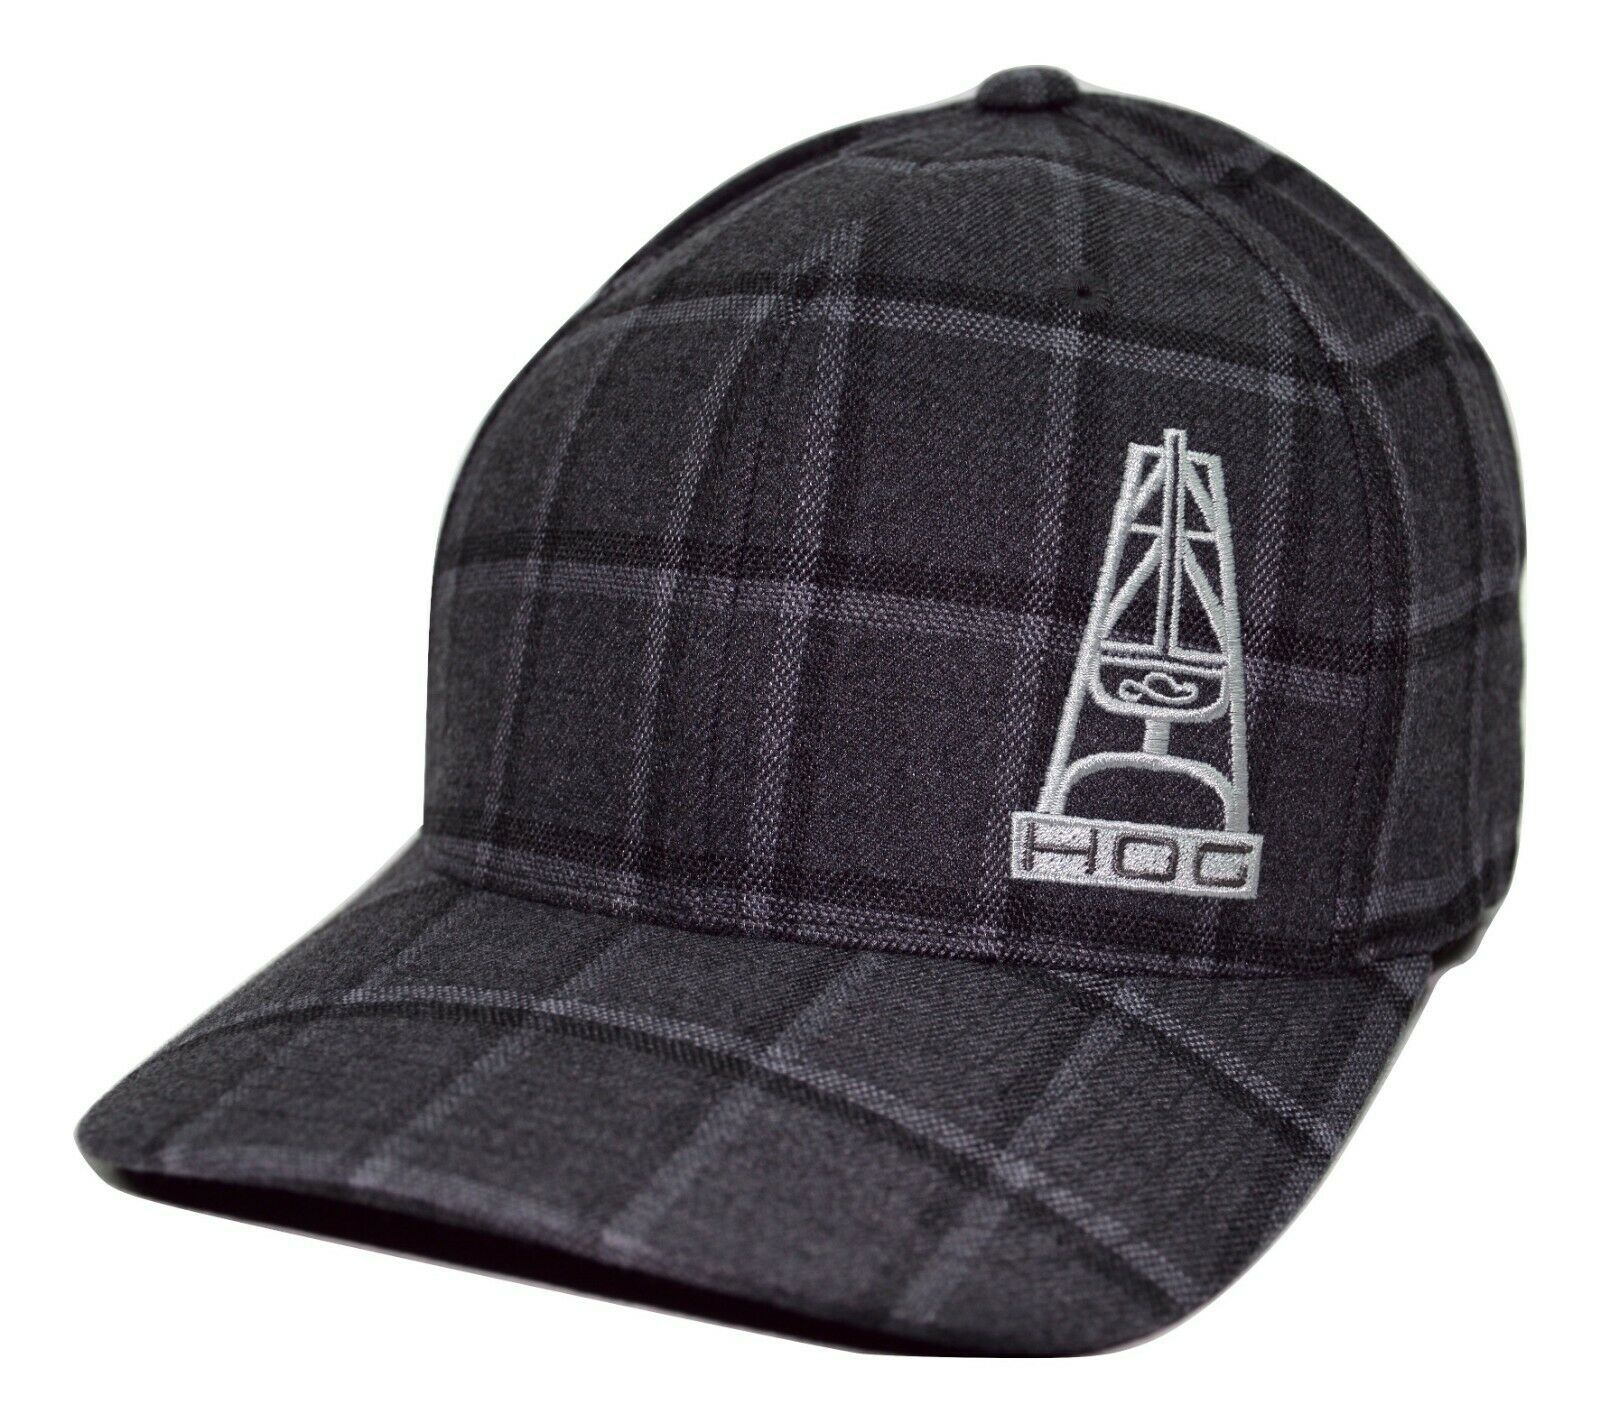 HOOey Hog Foreman Oil Gear Rig Logo Gray Plaid Flex Fit Cap L/XL - Hats